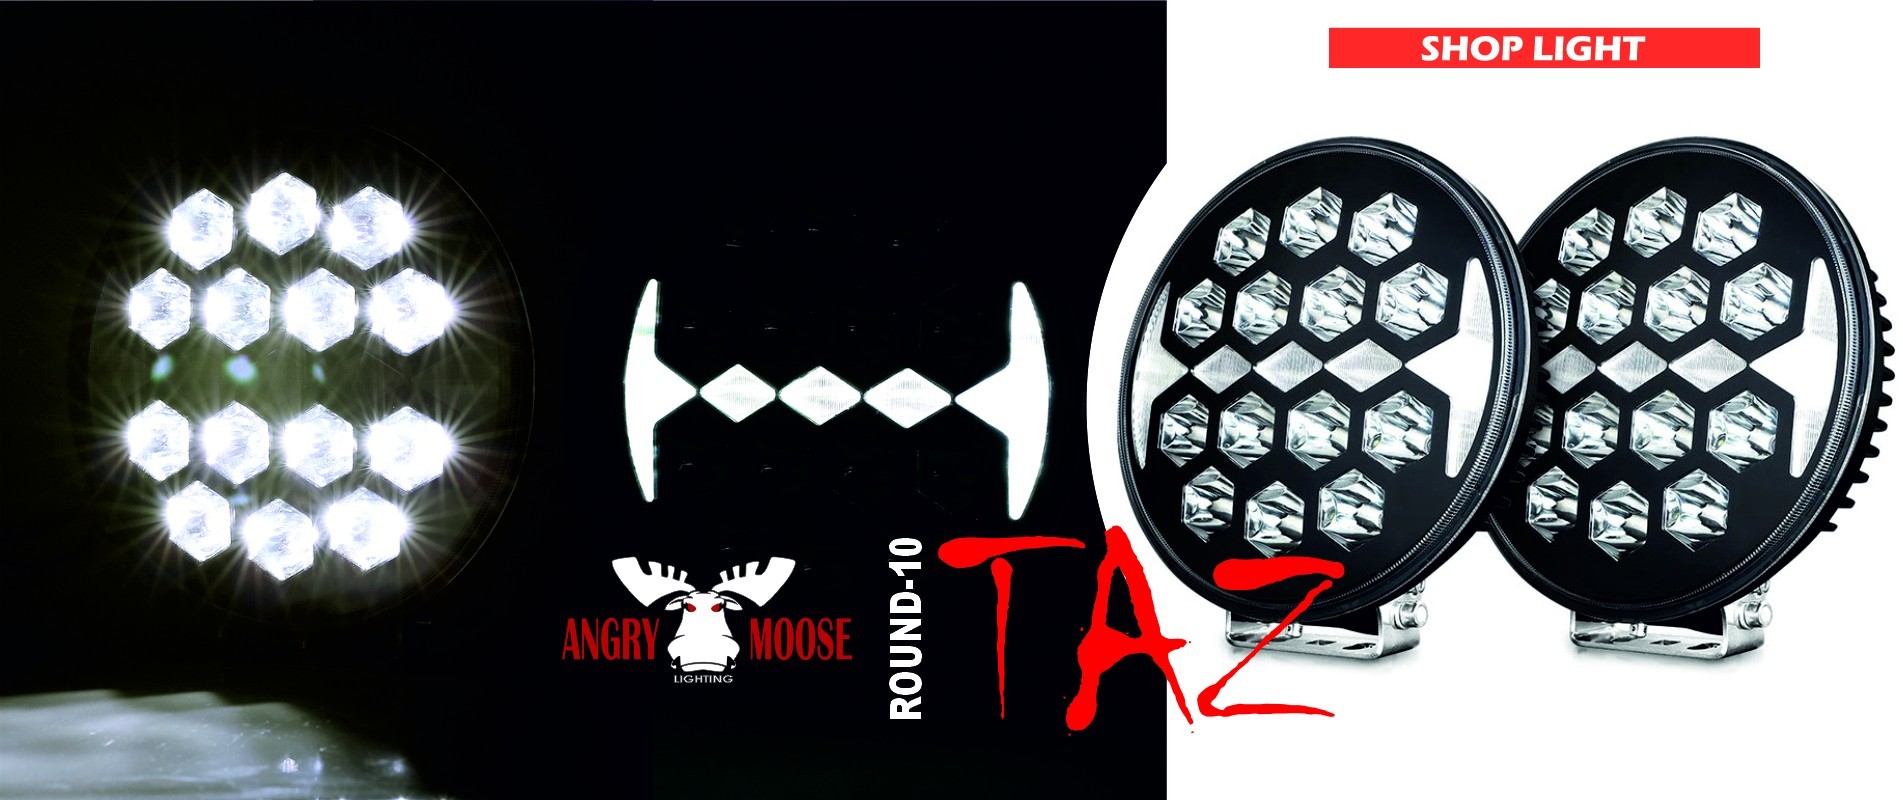 AngryMoose Round-10 9" TAZ